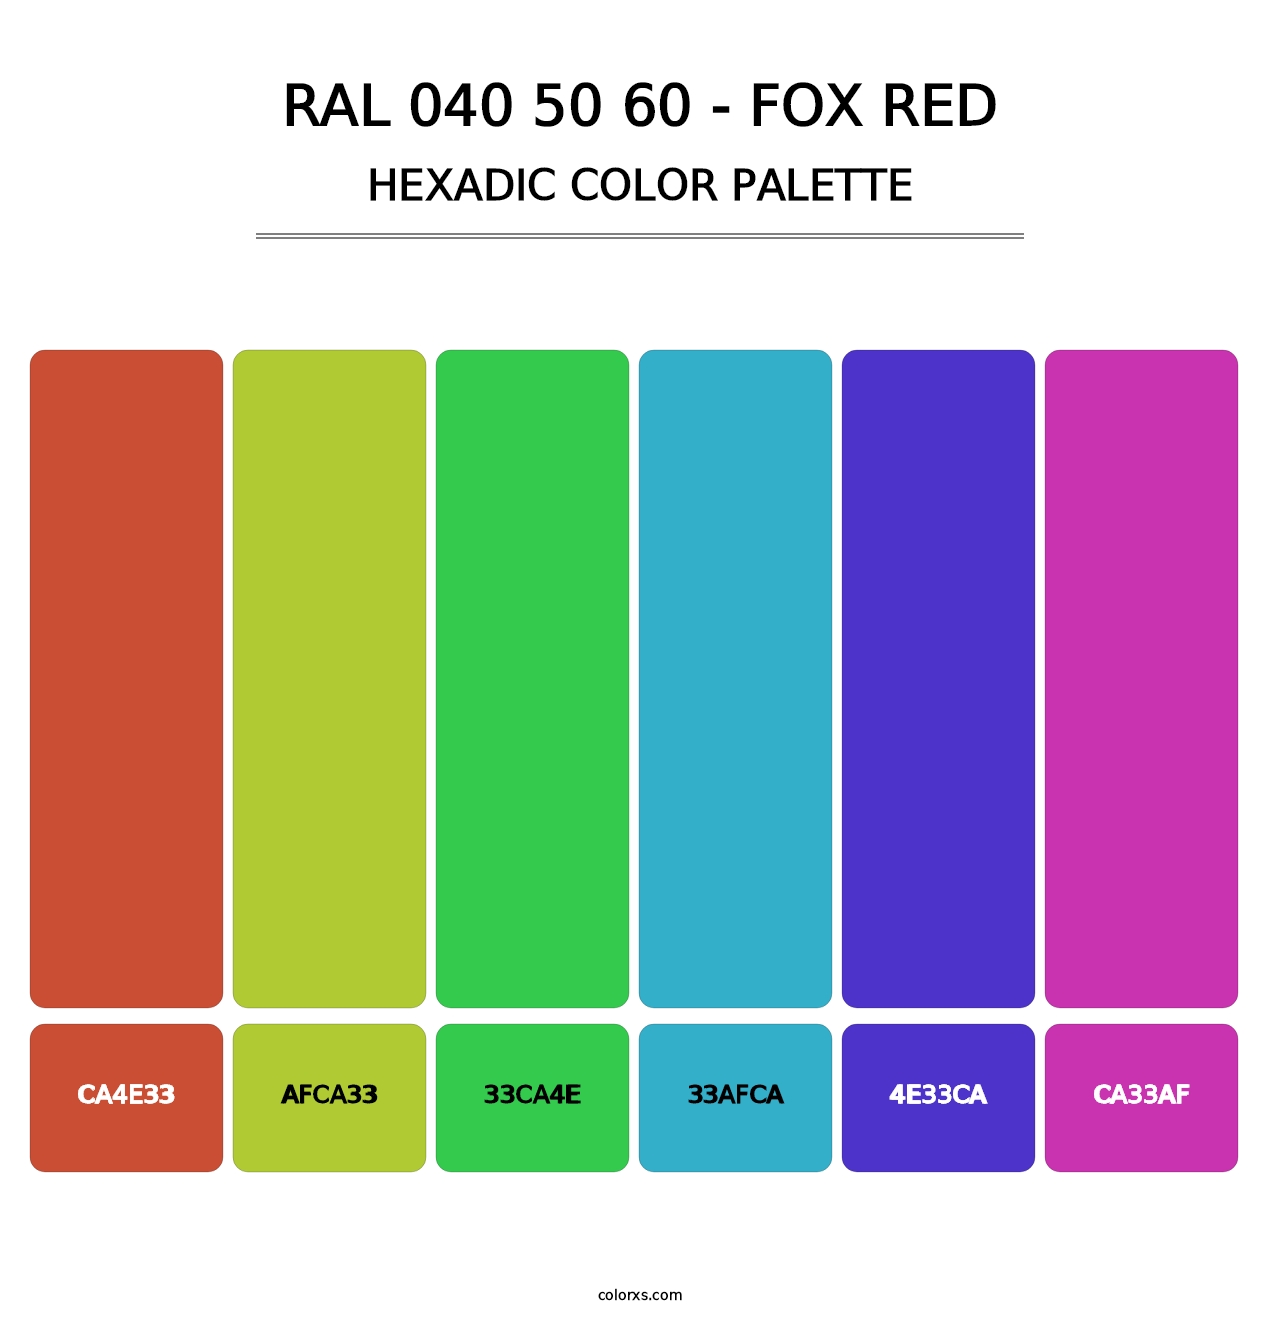 RAL 040 50 60 - Fox Red - Hexadic Color Palette